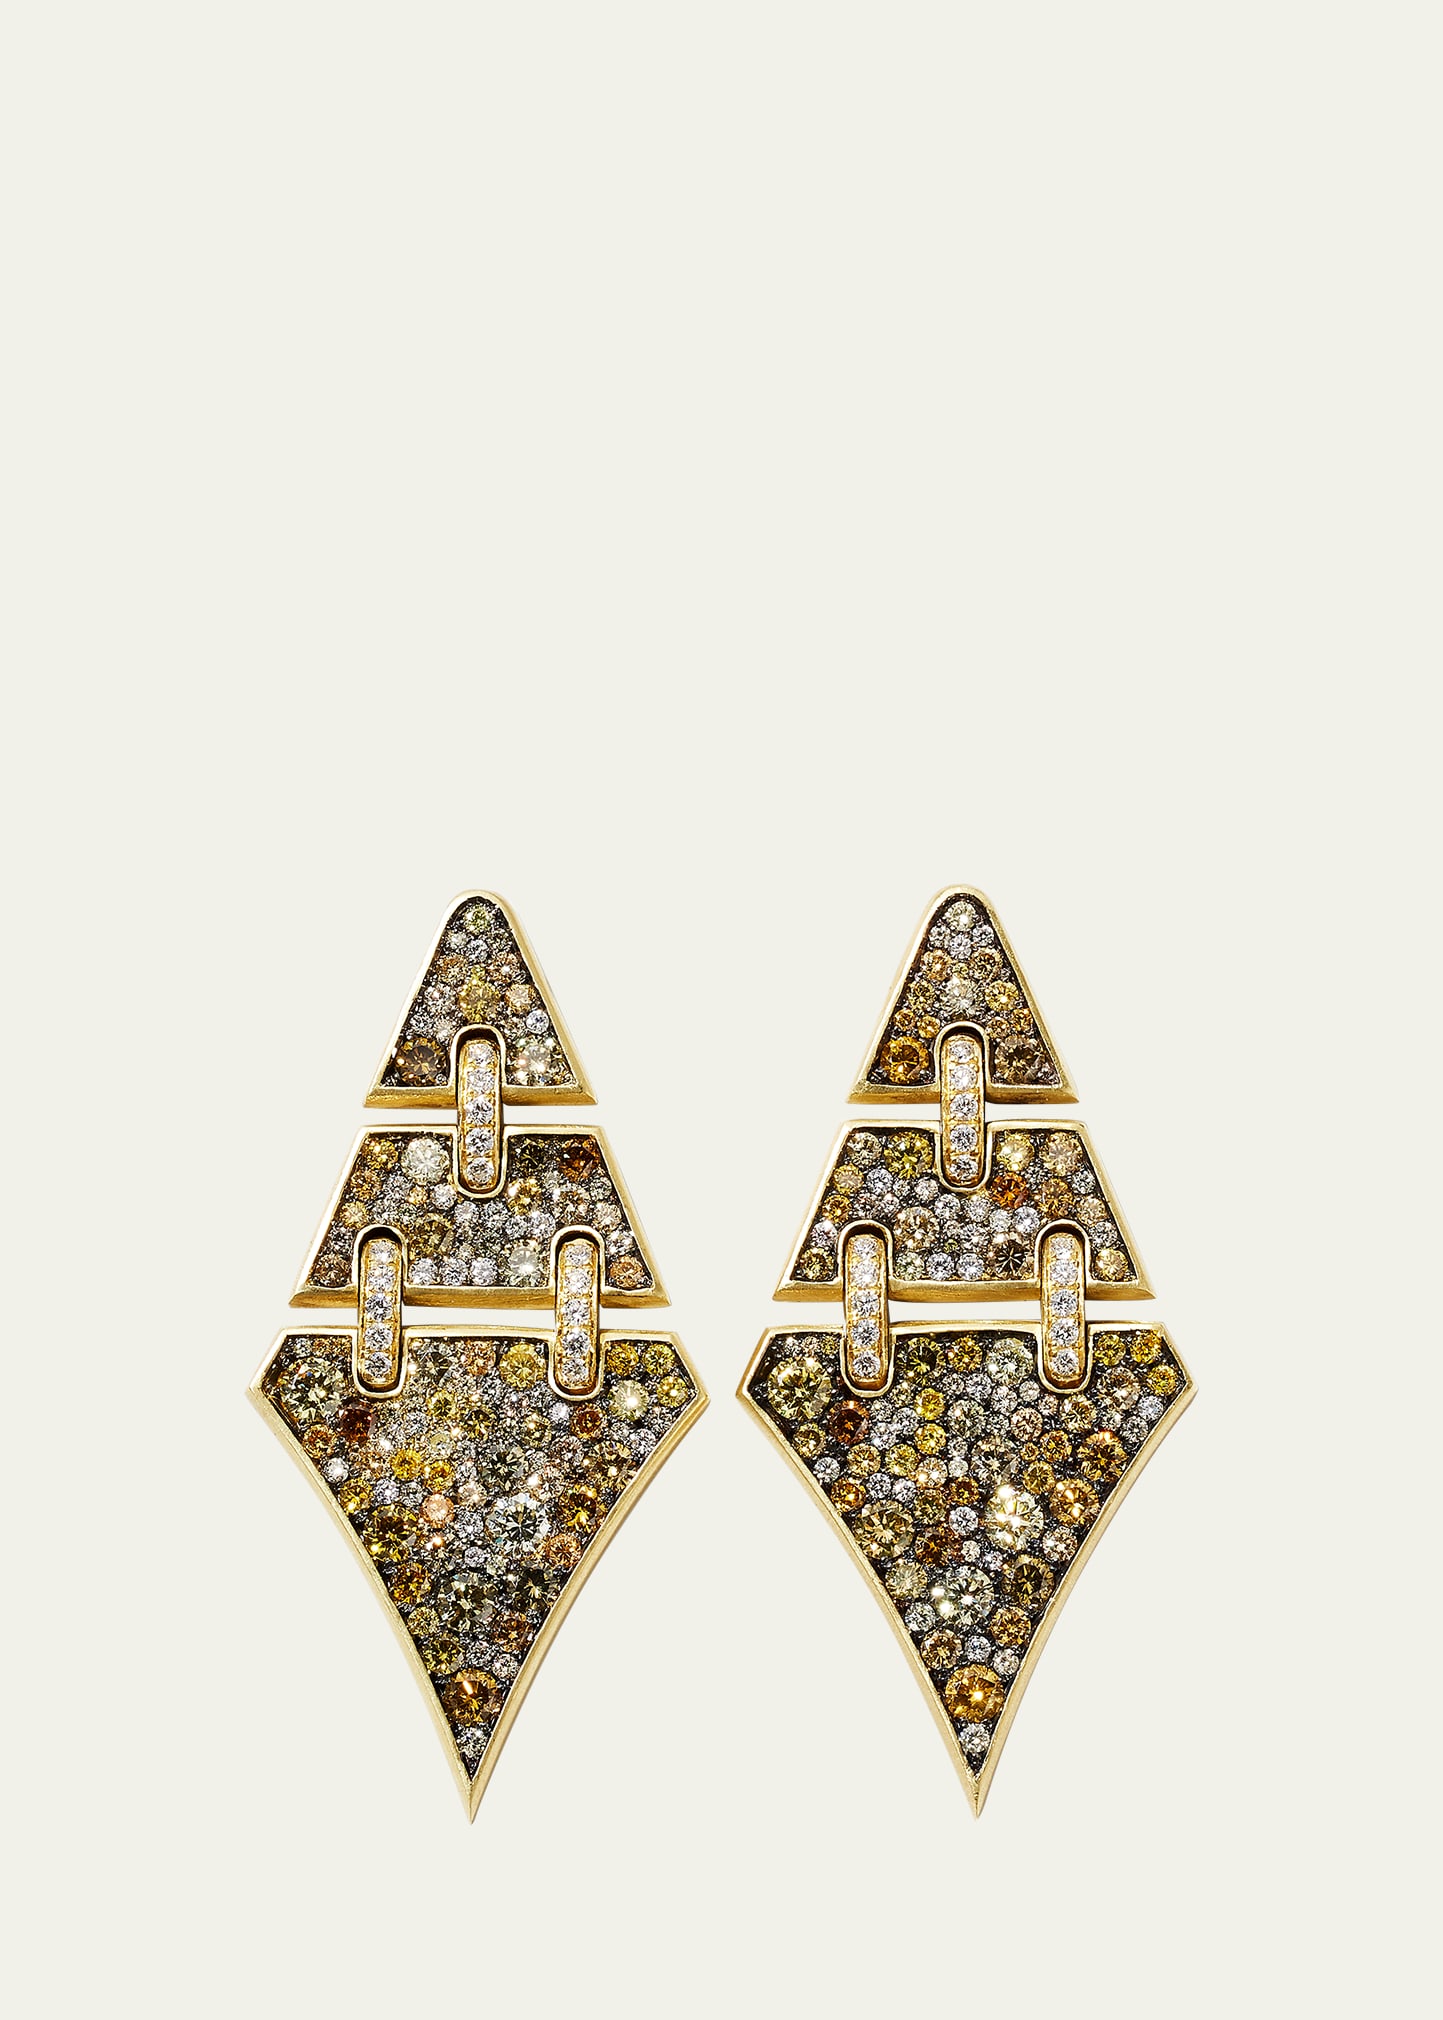 Jared Lehr Yellow Gold Triangular Earrings With Diamonds